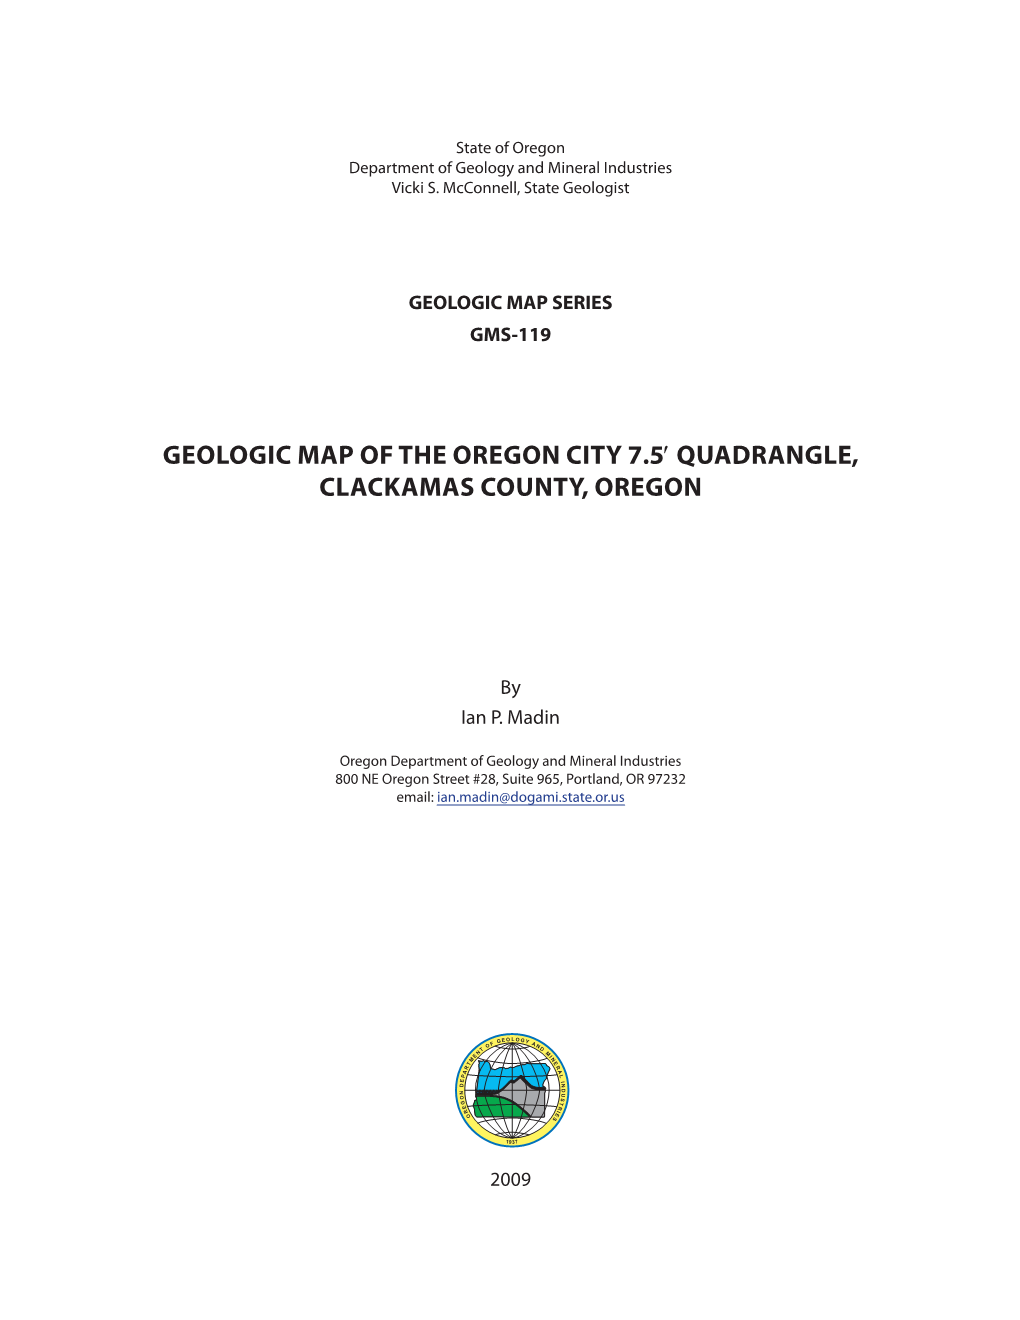 Geologic Map of the Oregon City 7.5′ Quadrangle, Clackamas County, Oregon